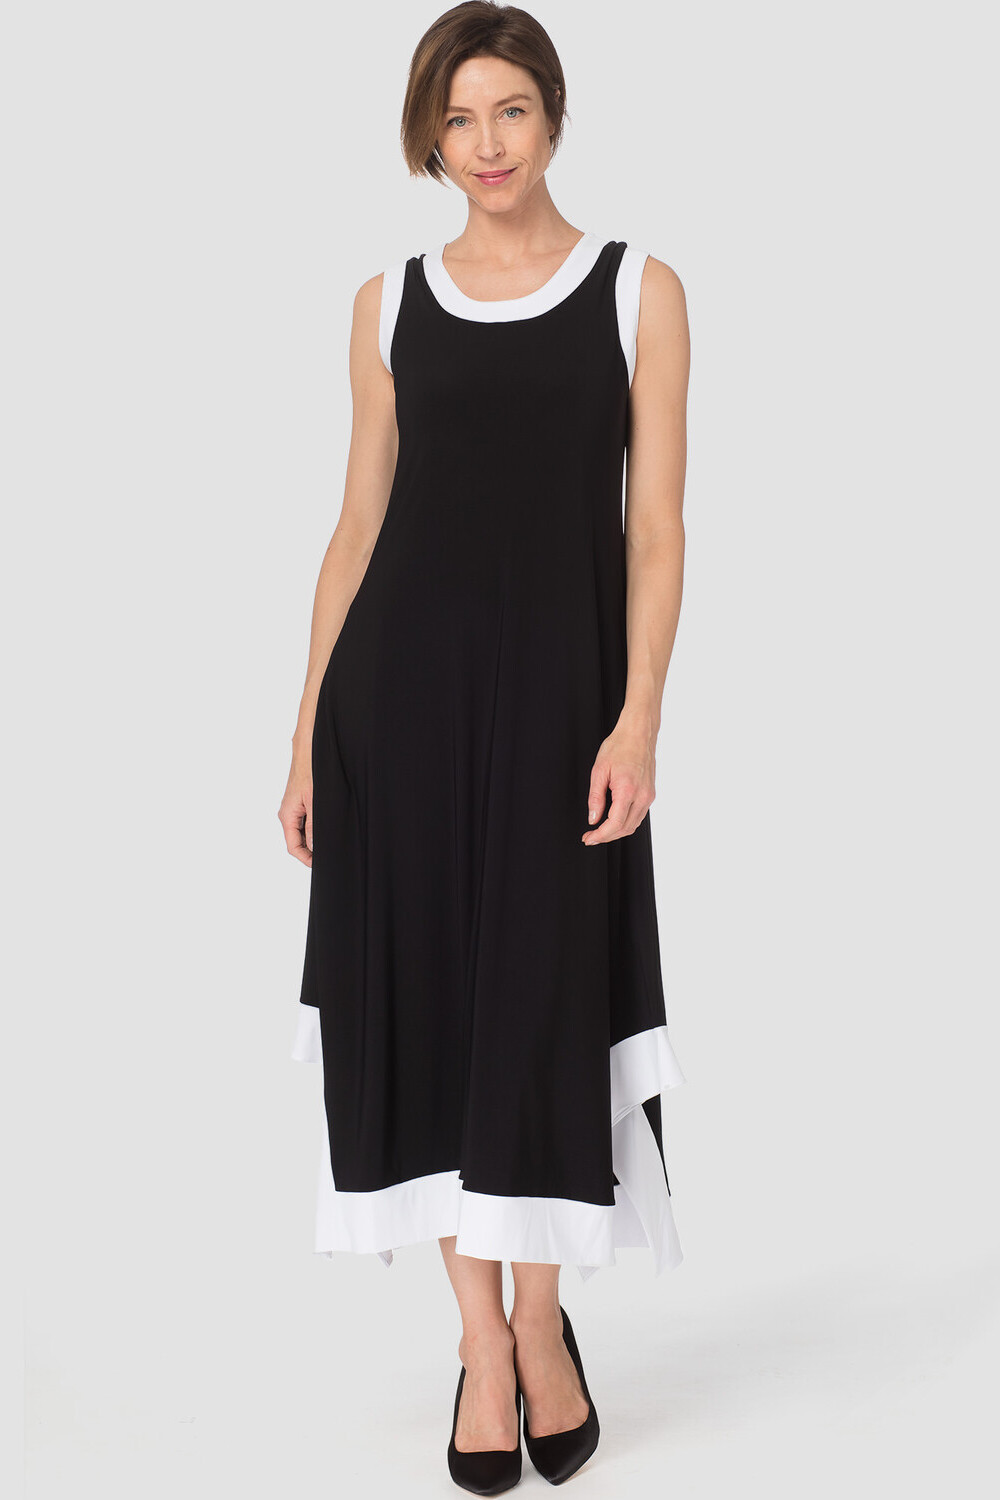 Joseph Ribkoff robe style 182024. Noir/blanc